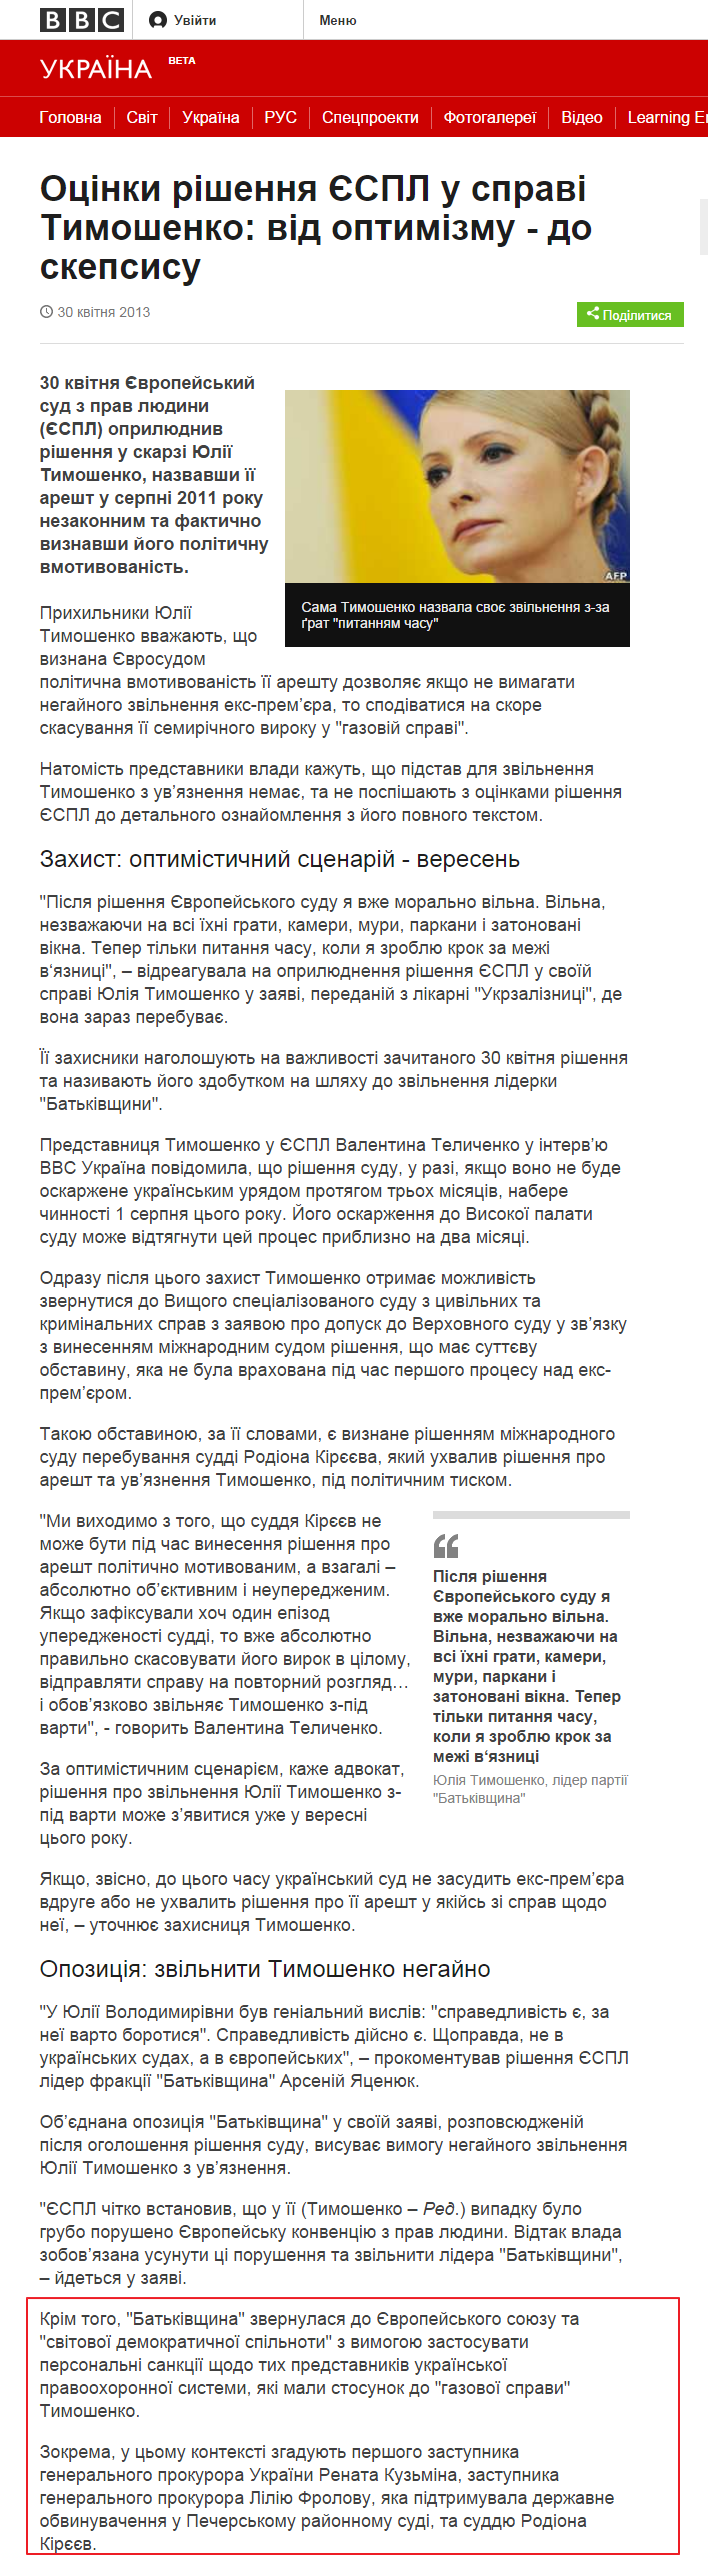 http://www.bbc.co.uk/ukrainian/politics/2013/04/130430_tymoshenko_echr_reaction_sx